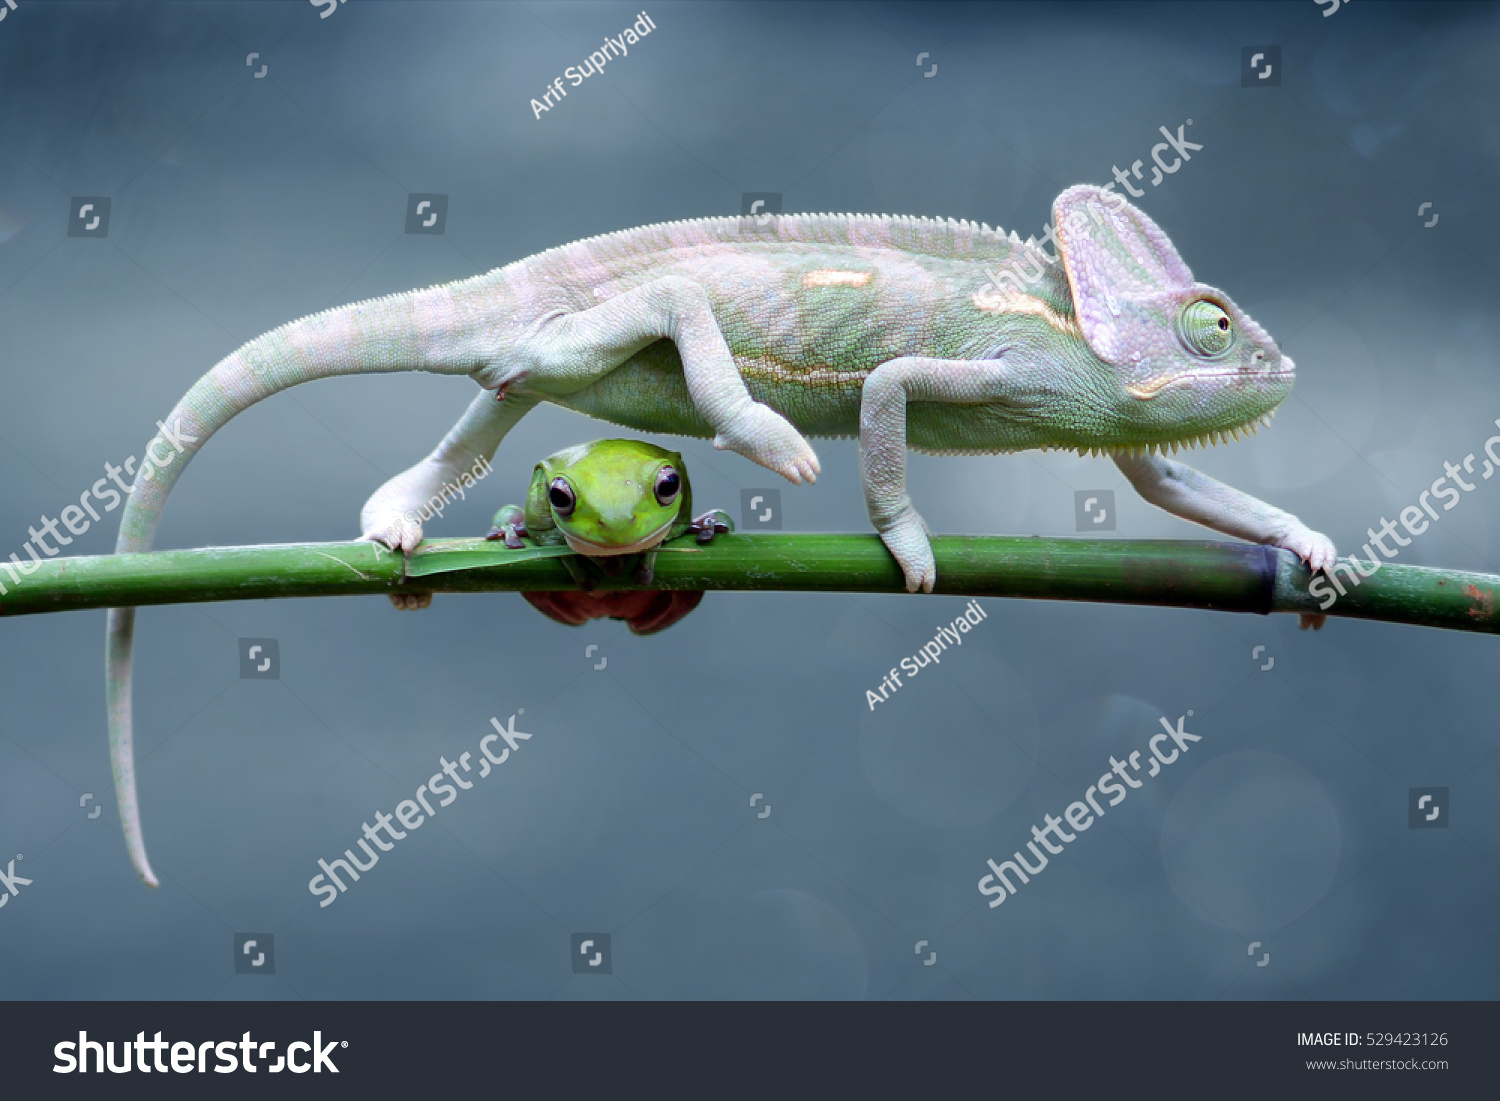 reptile, reptiles, chameleon, macro, animal, animals, indonesia, chameleon veiled, chameleon with frog, dumpy frog, tree frog, frog, #529423126